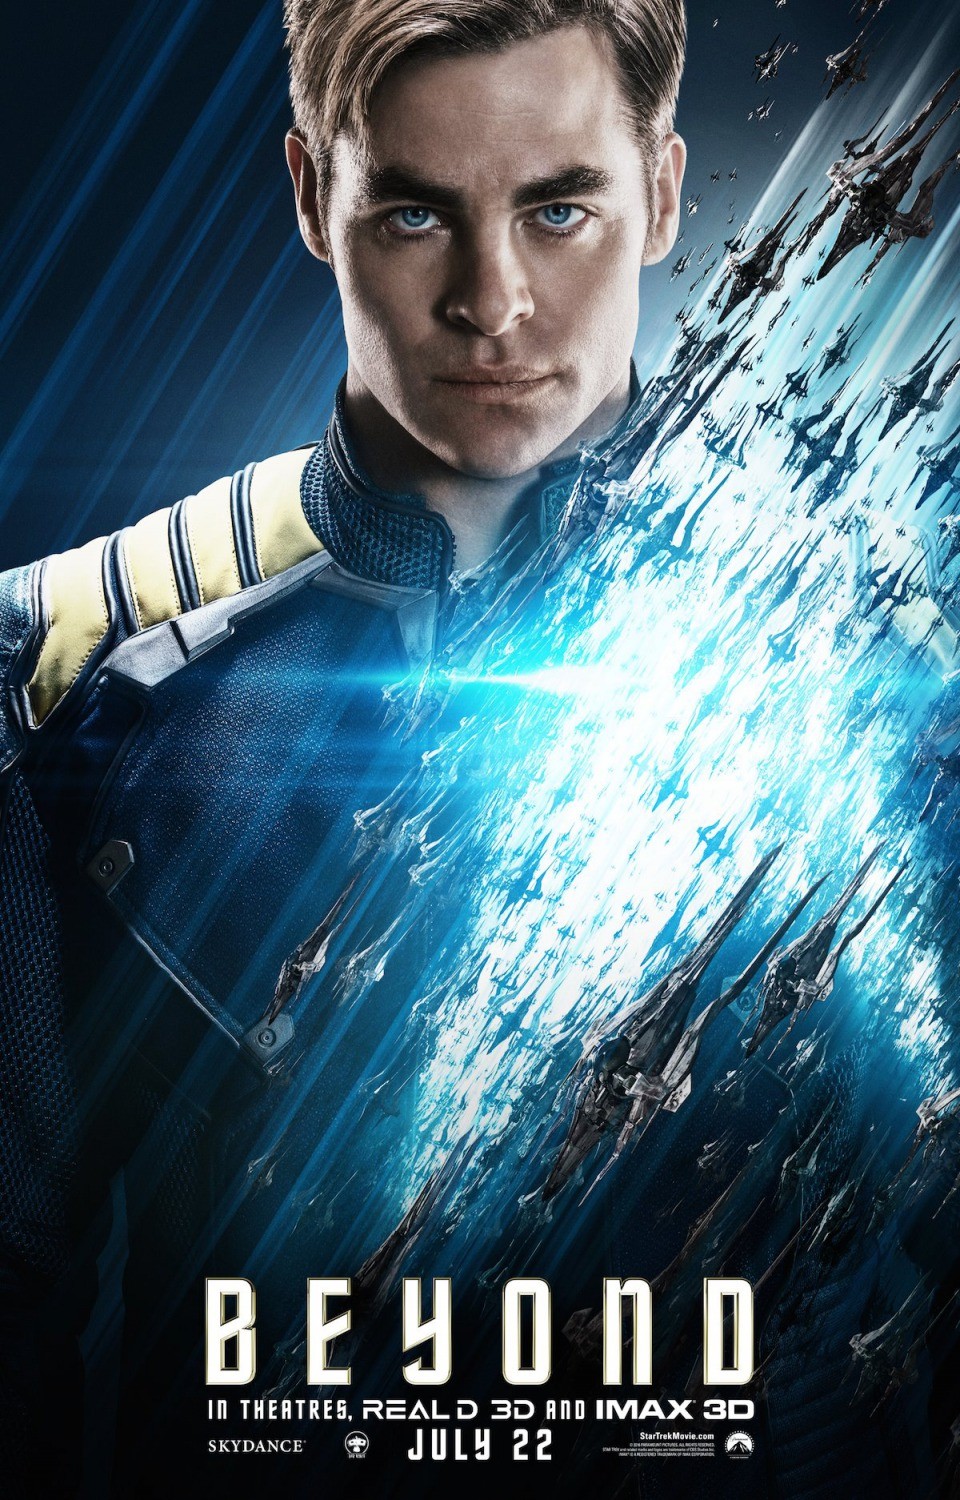 Poster of Paramount Pictures' Star Trek Beyond (2016)